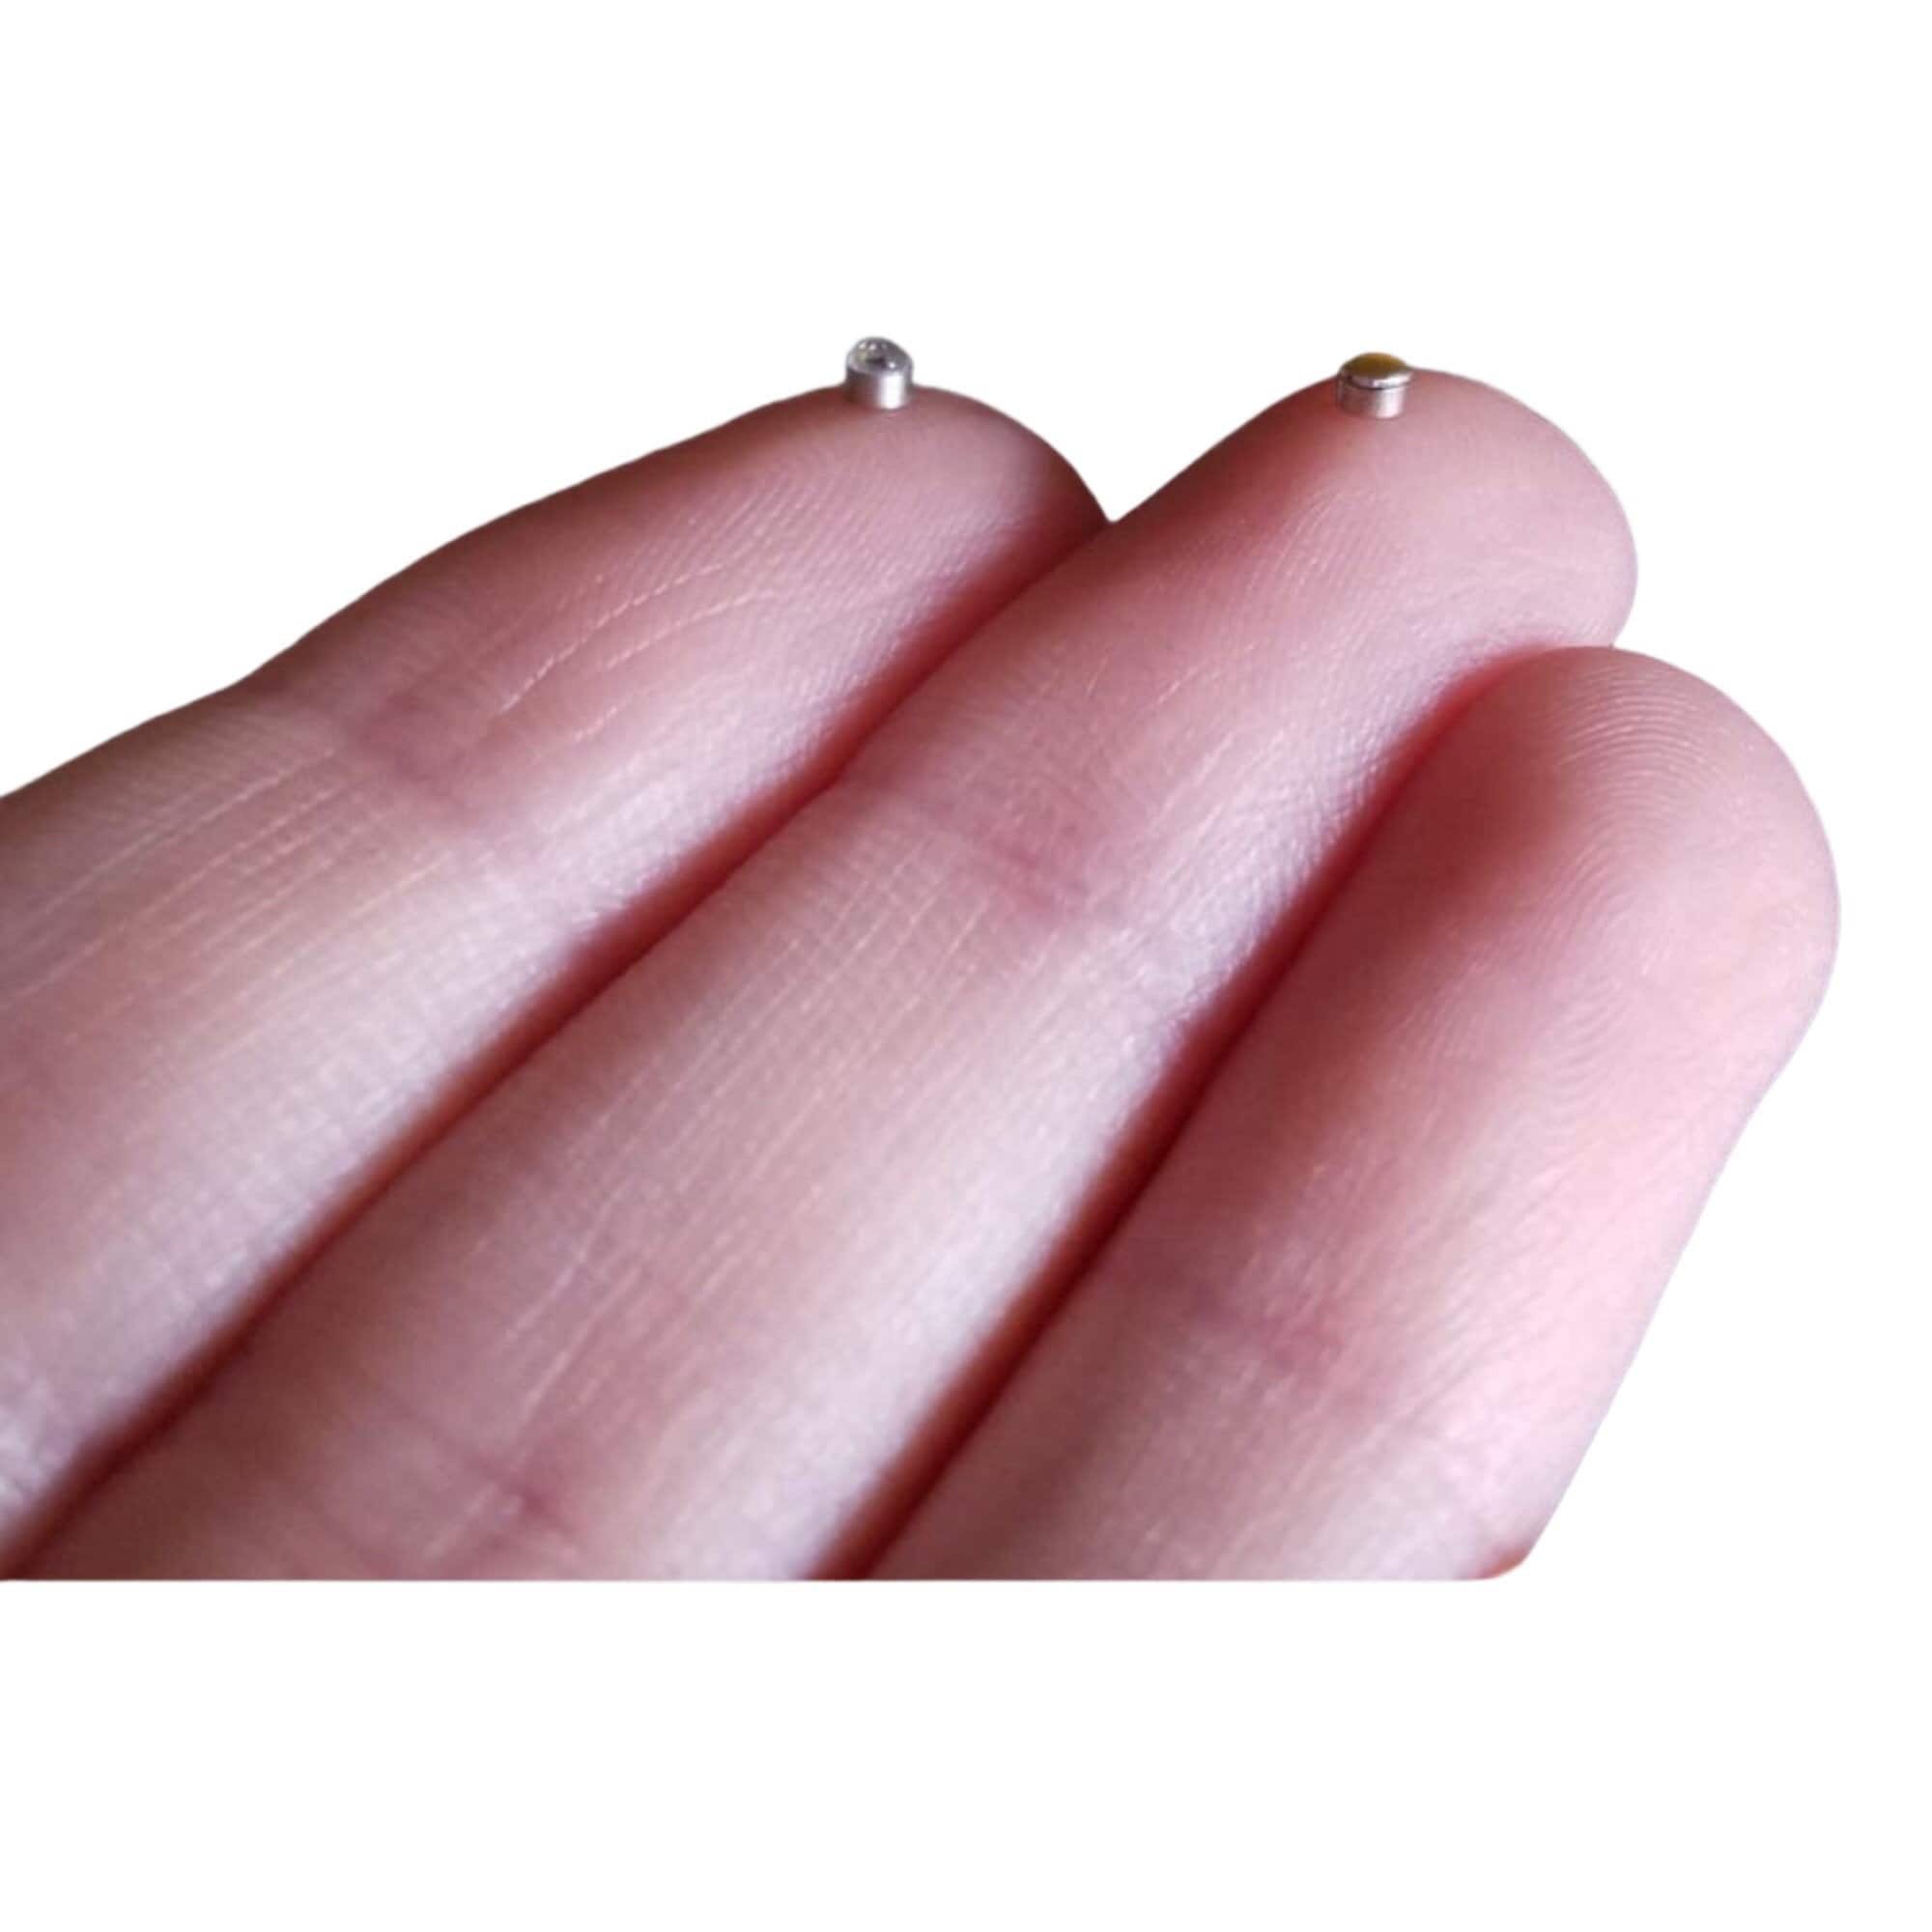 Fake Magnetic nose stud piercing - 1.5mm, 2mm, 2.5mm, 3mm